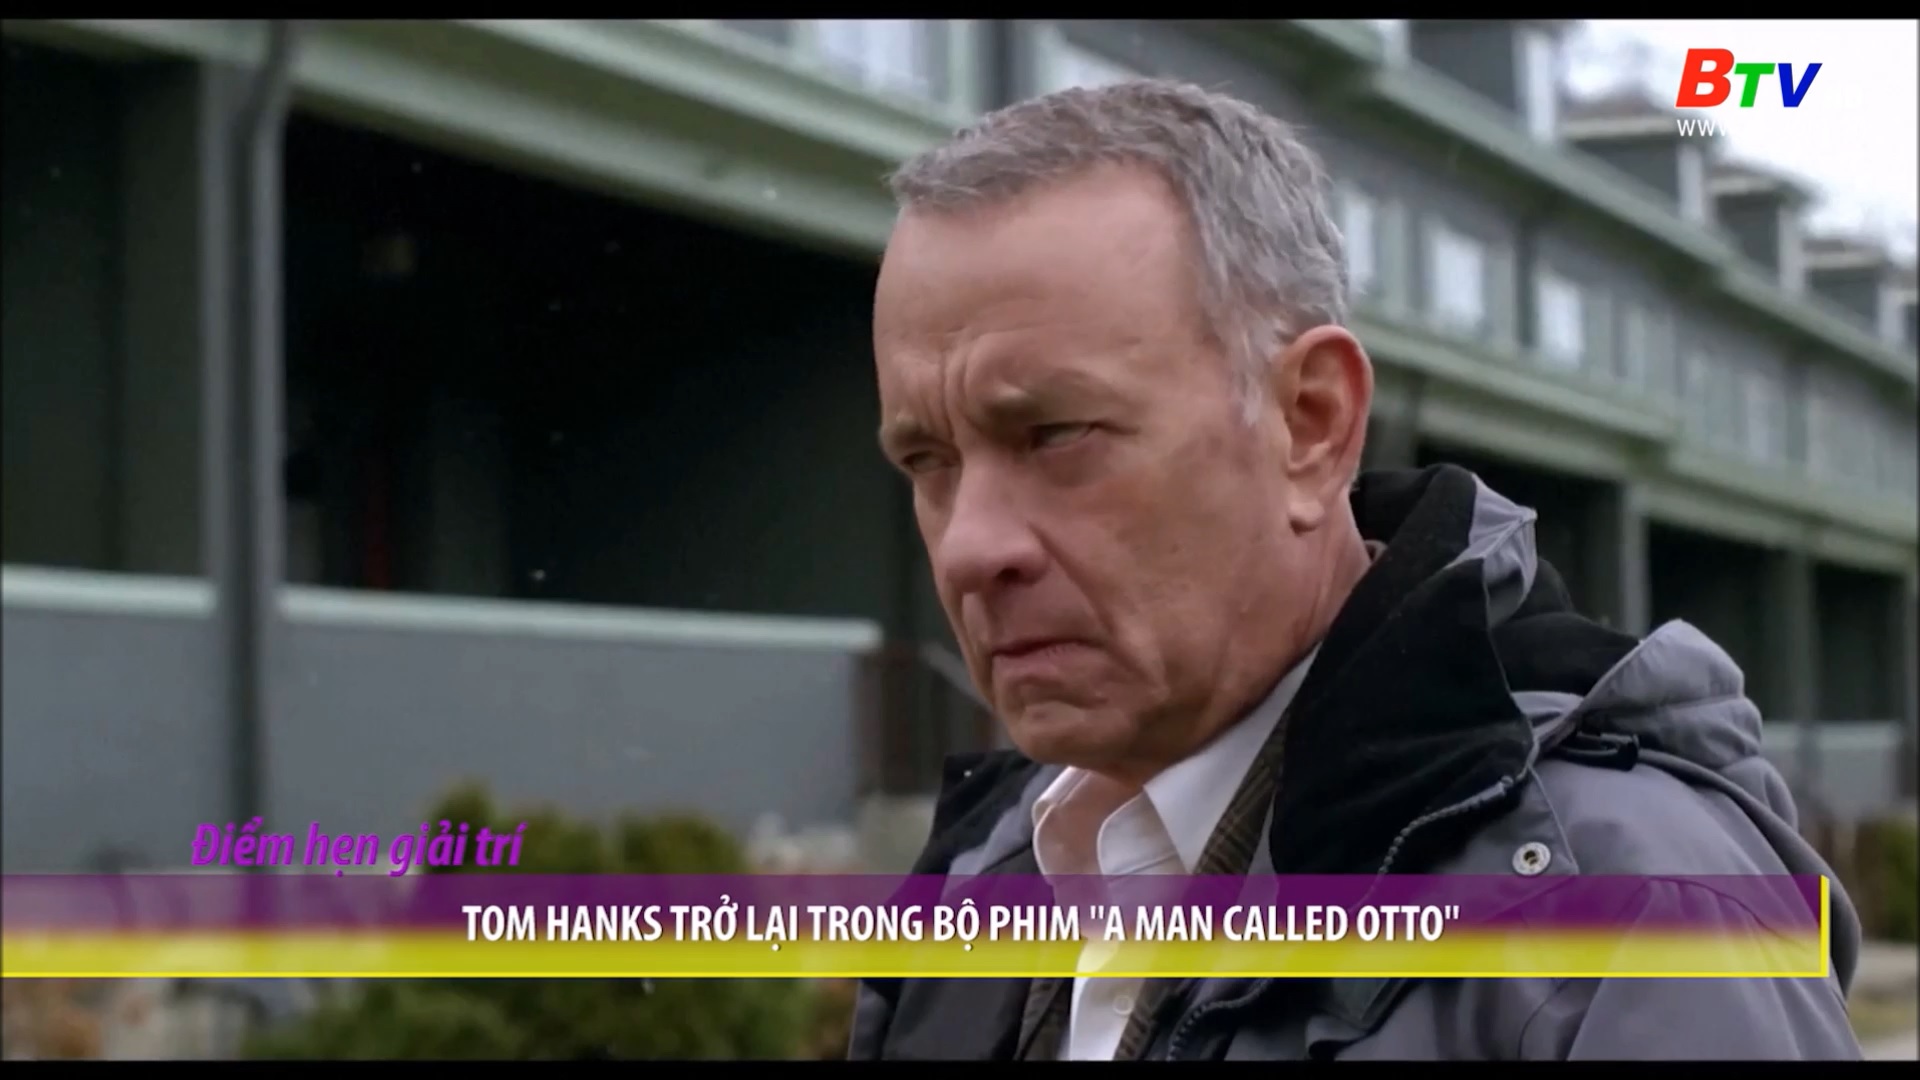 Tom Hanks trở lại trong bộ phim “A Man Called Otto”